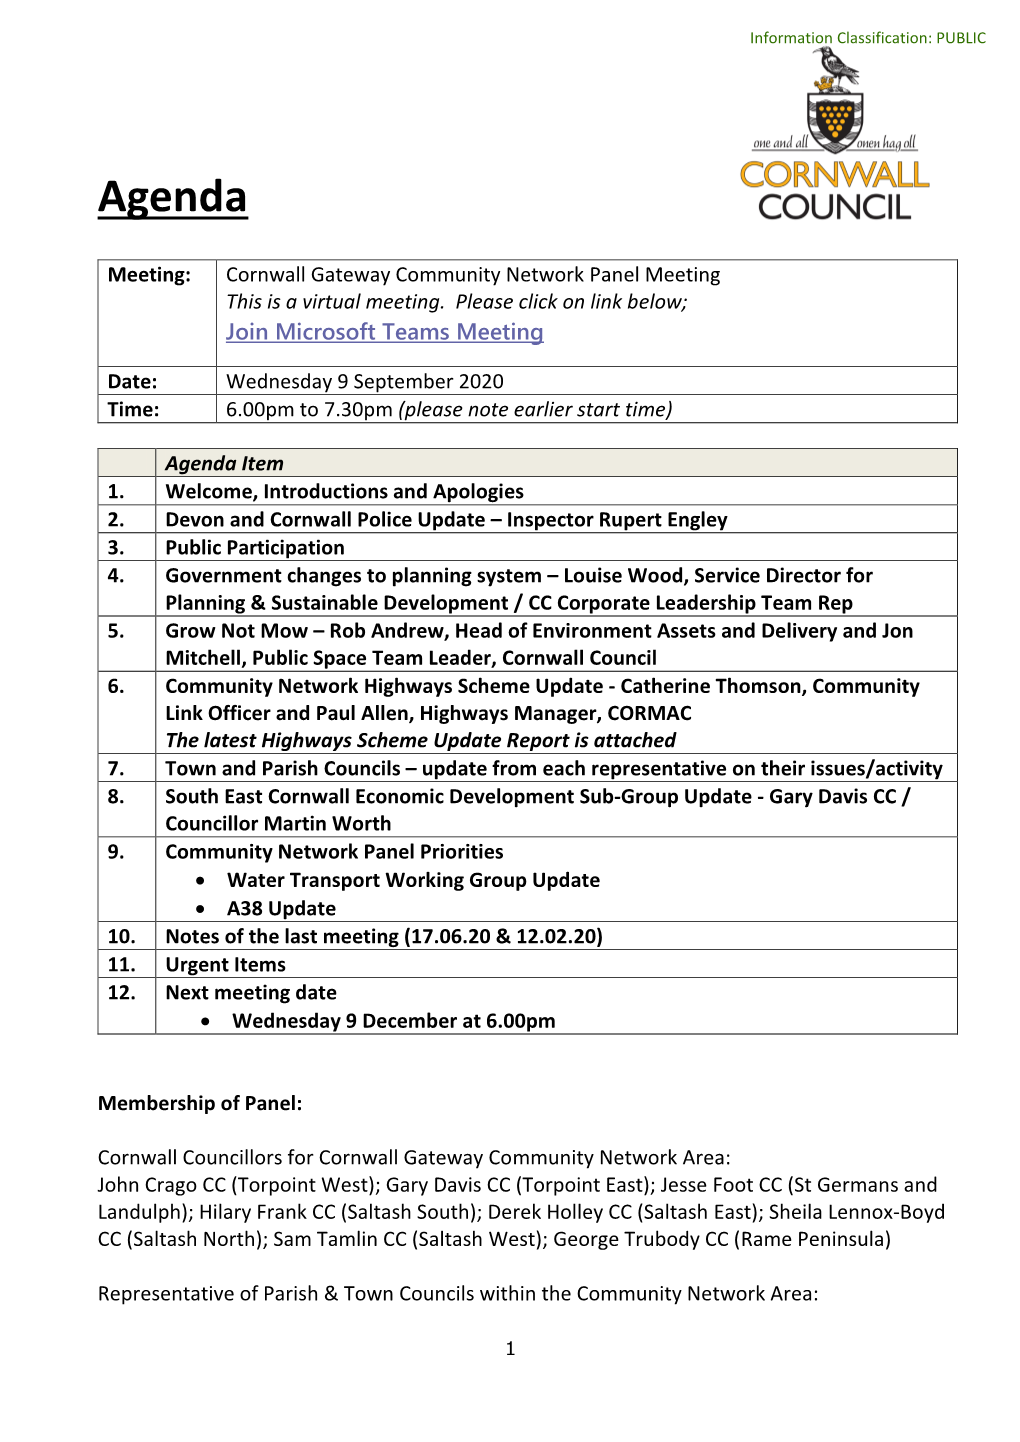 Agenda for Cornwall Gateway Community Network Meeting